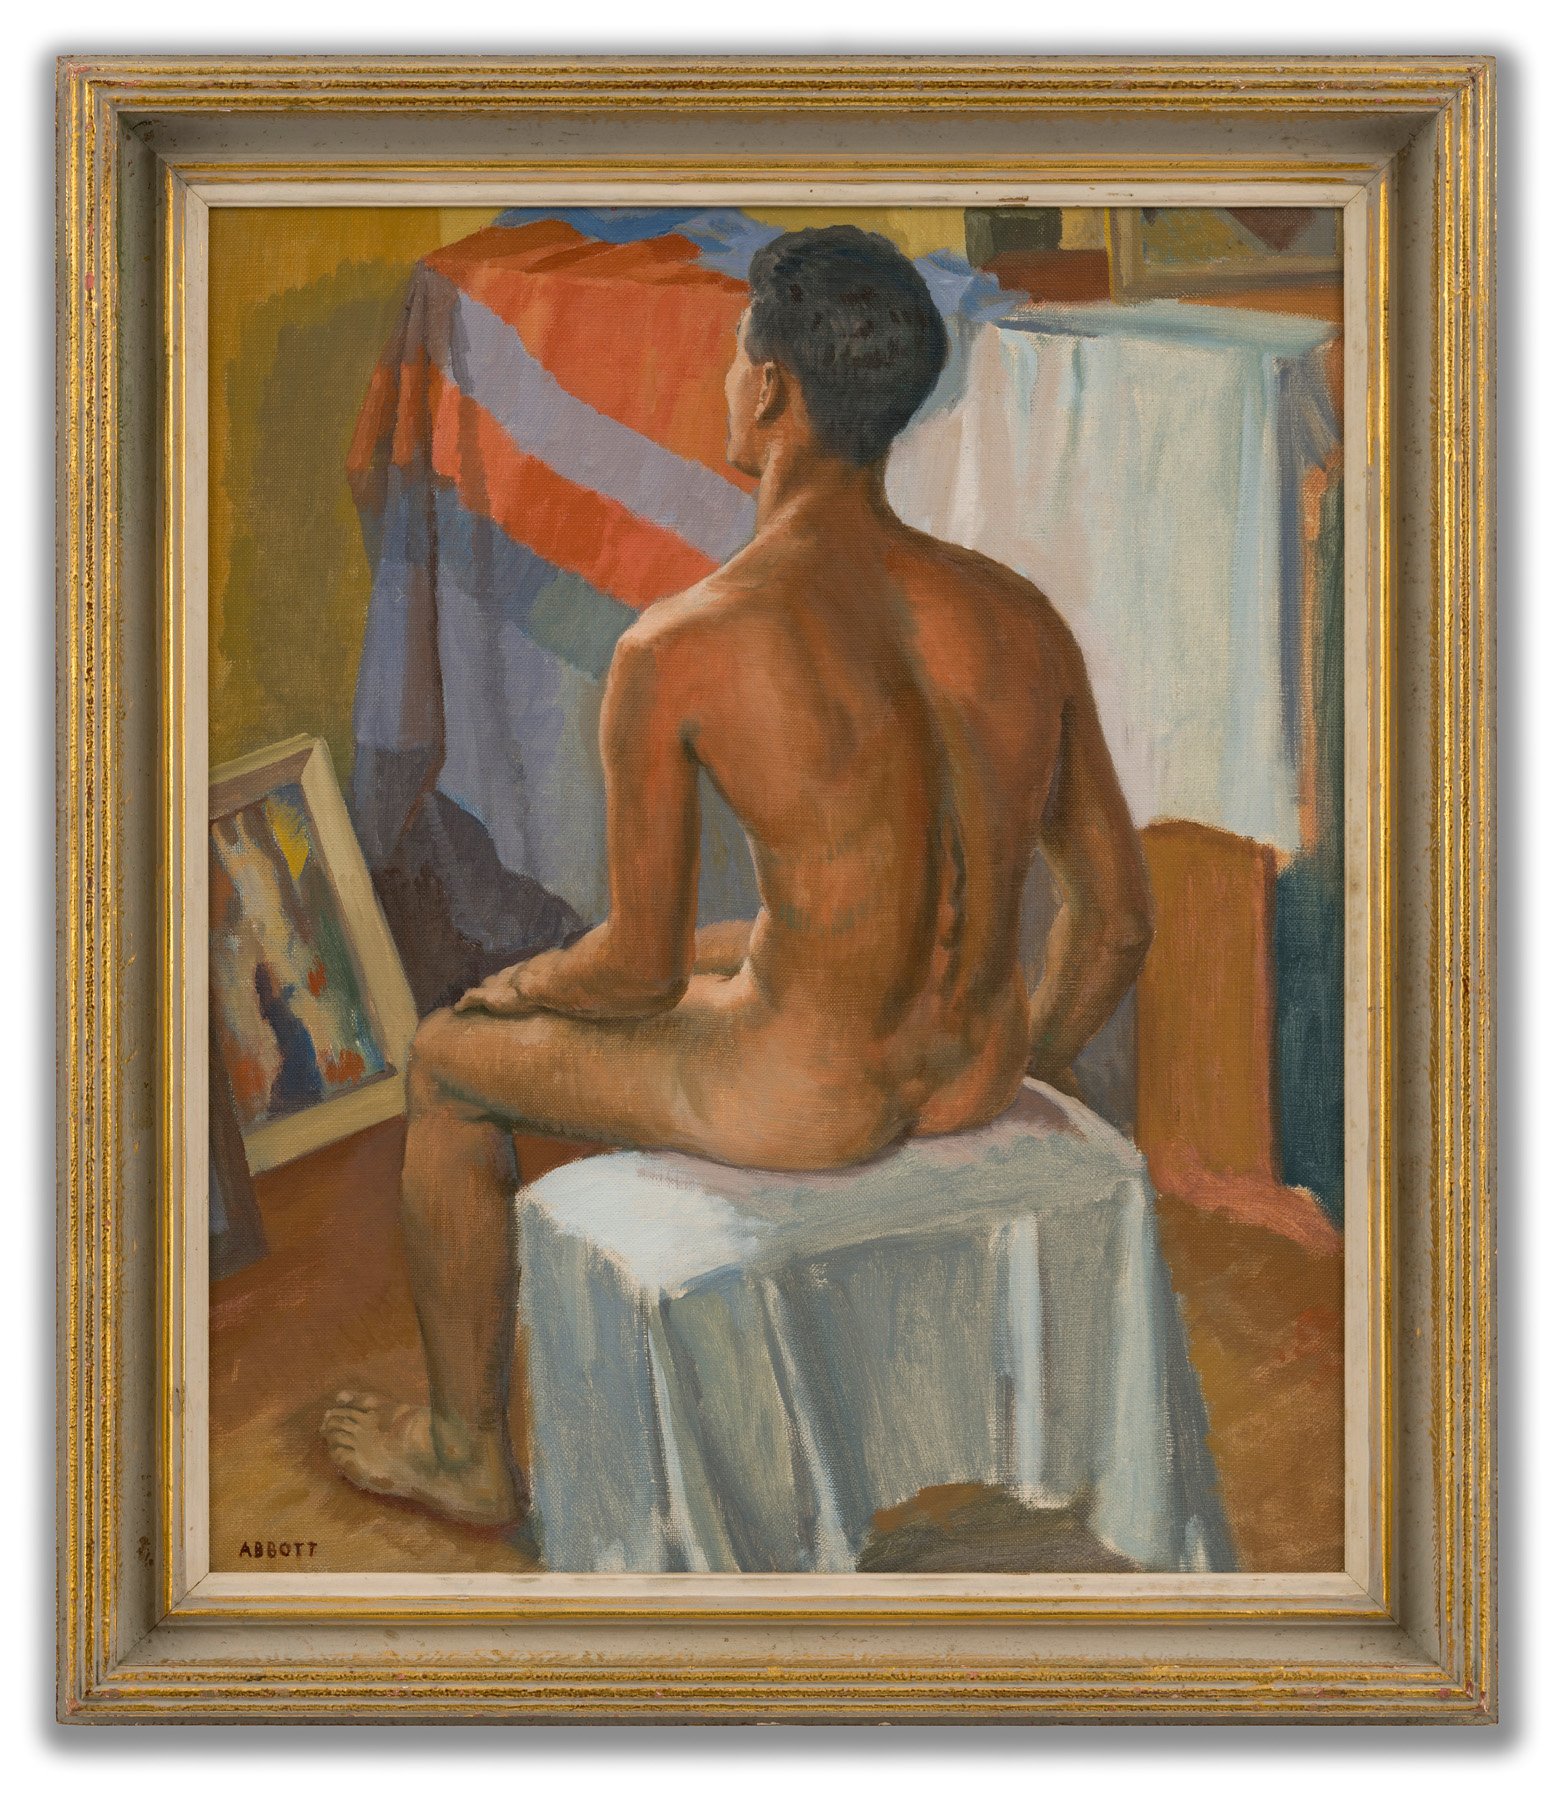 Harold Frederick Abbott, (Australian 1906-1986), Model in a Studio, c.1950s